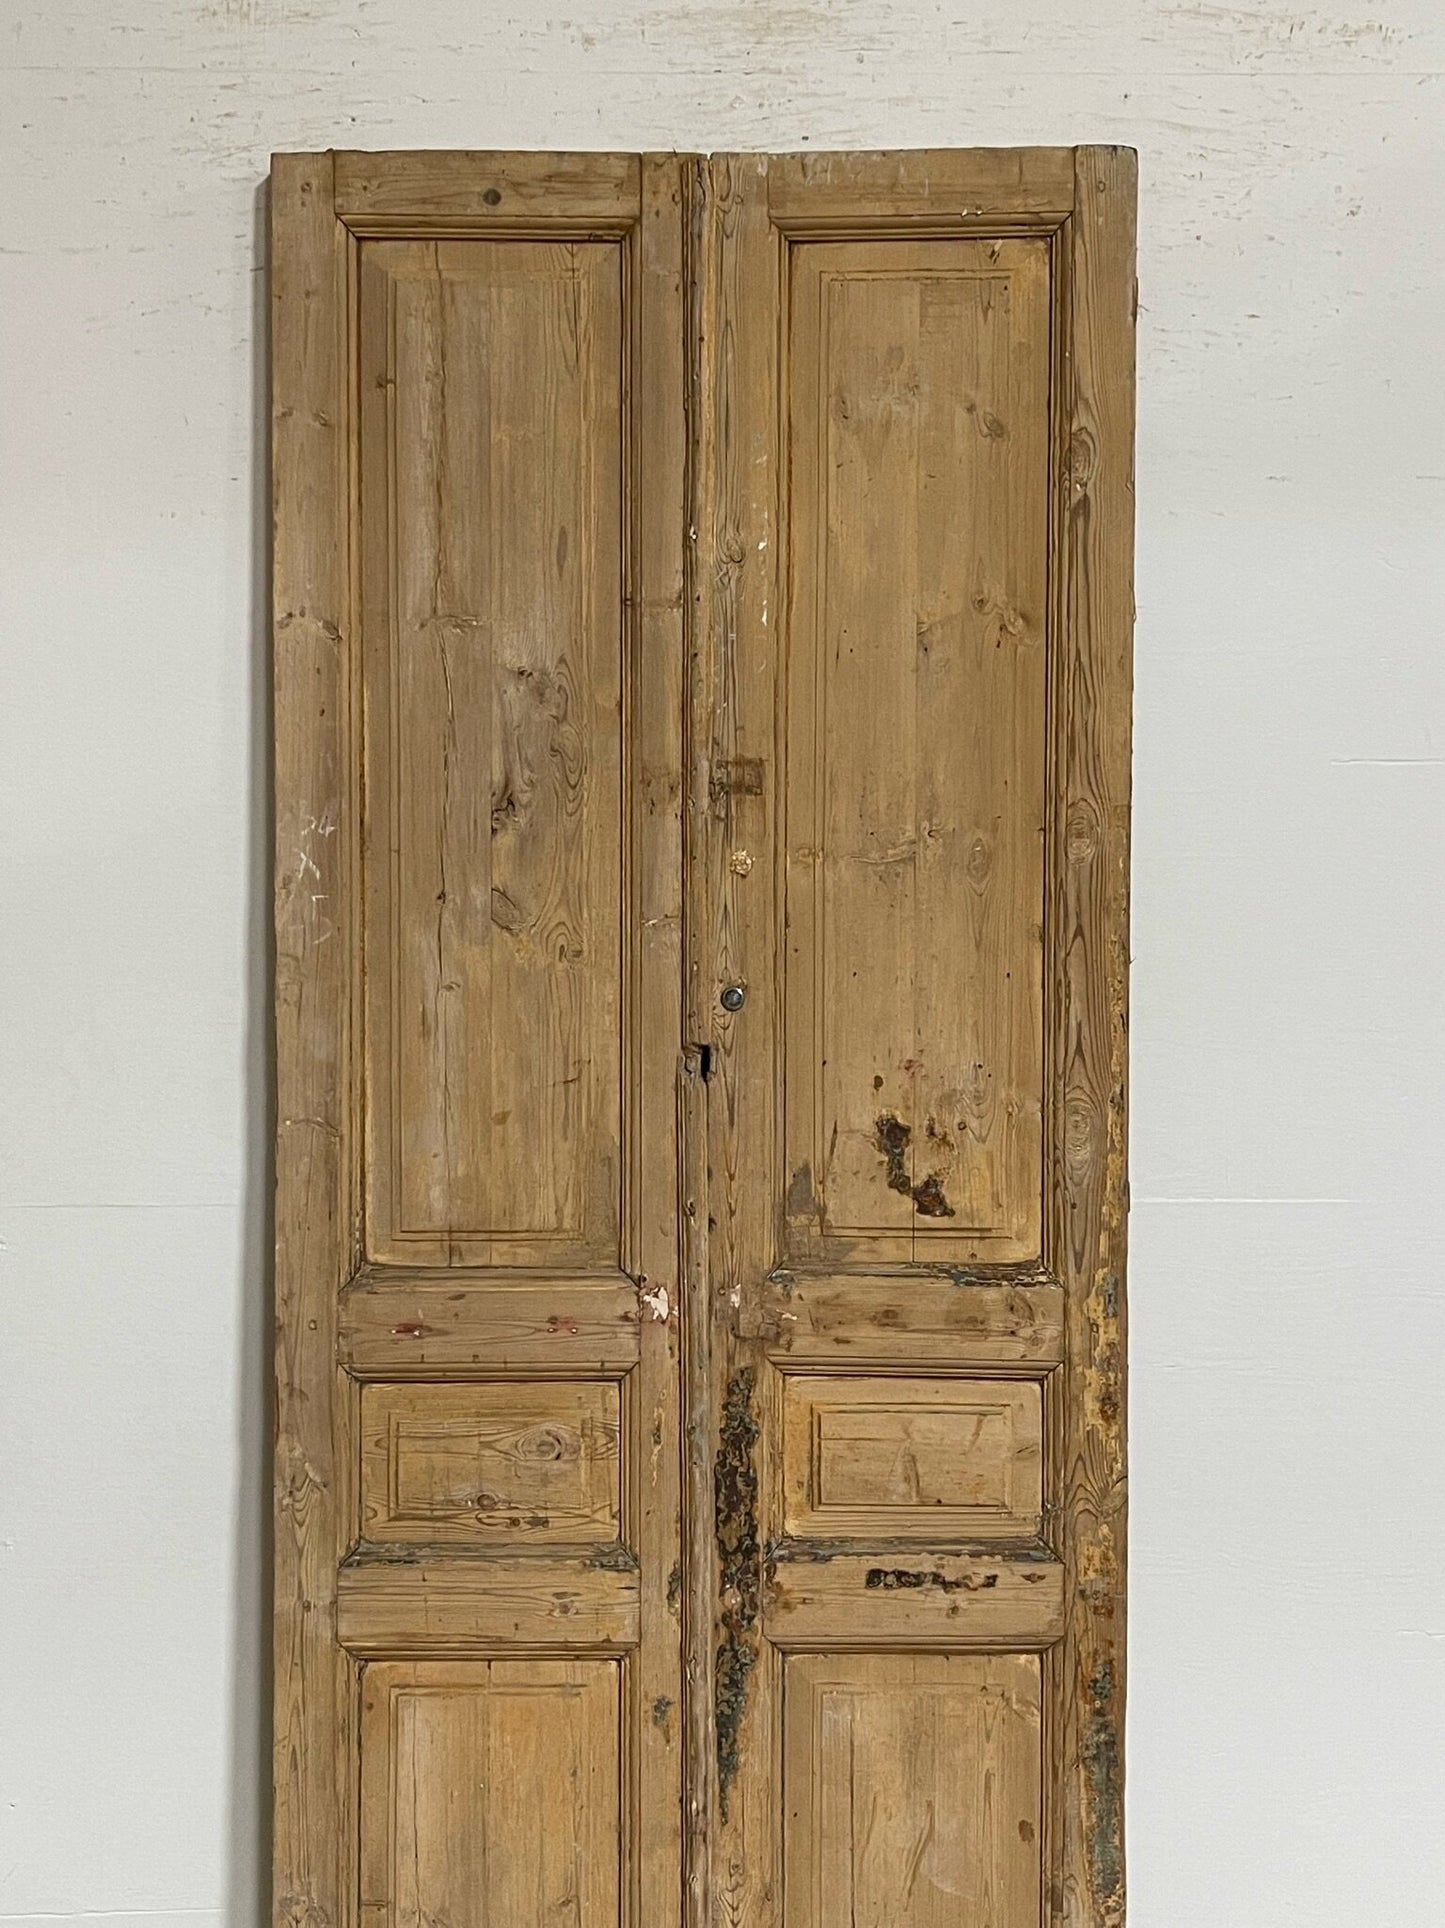 Antique French doors (92X35.75) G0165